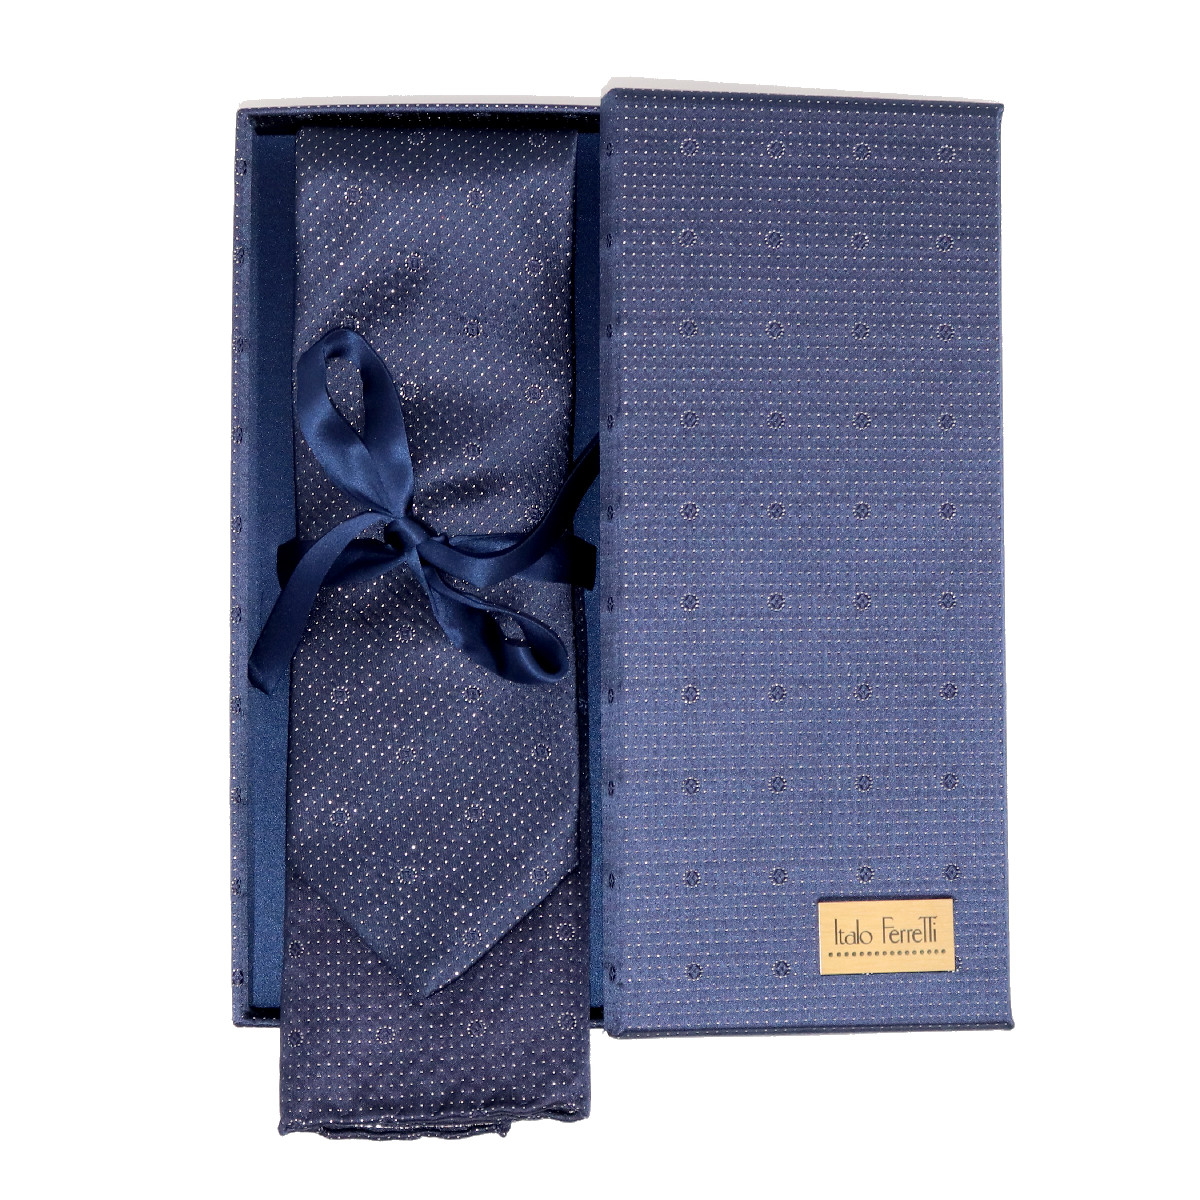 Authentic Louis Vuitton XS Shopping Gift Bag 5 1/2 X 4 1/2 X 3 + Receipt  Card